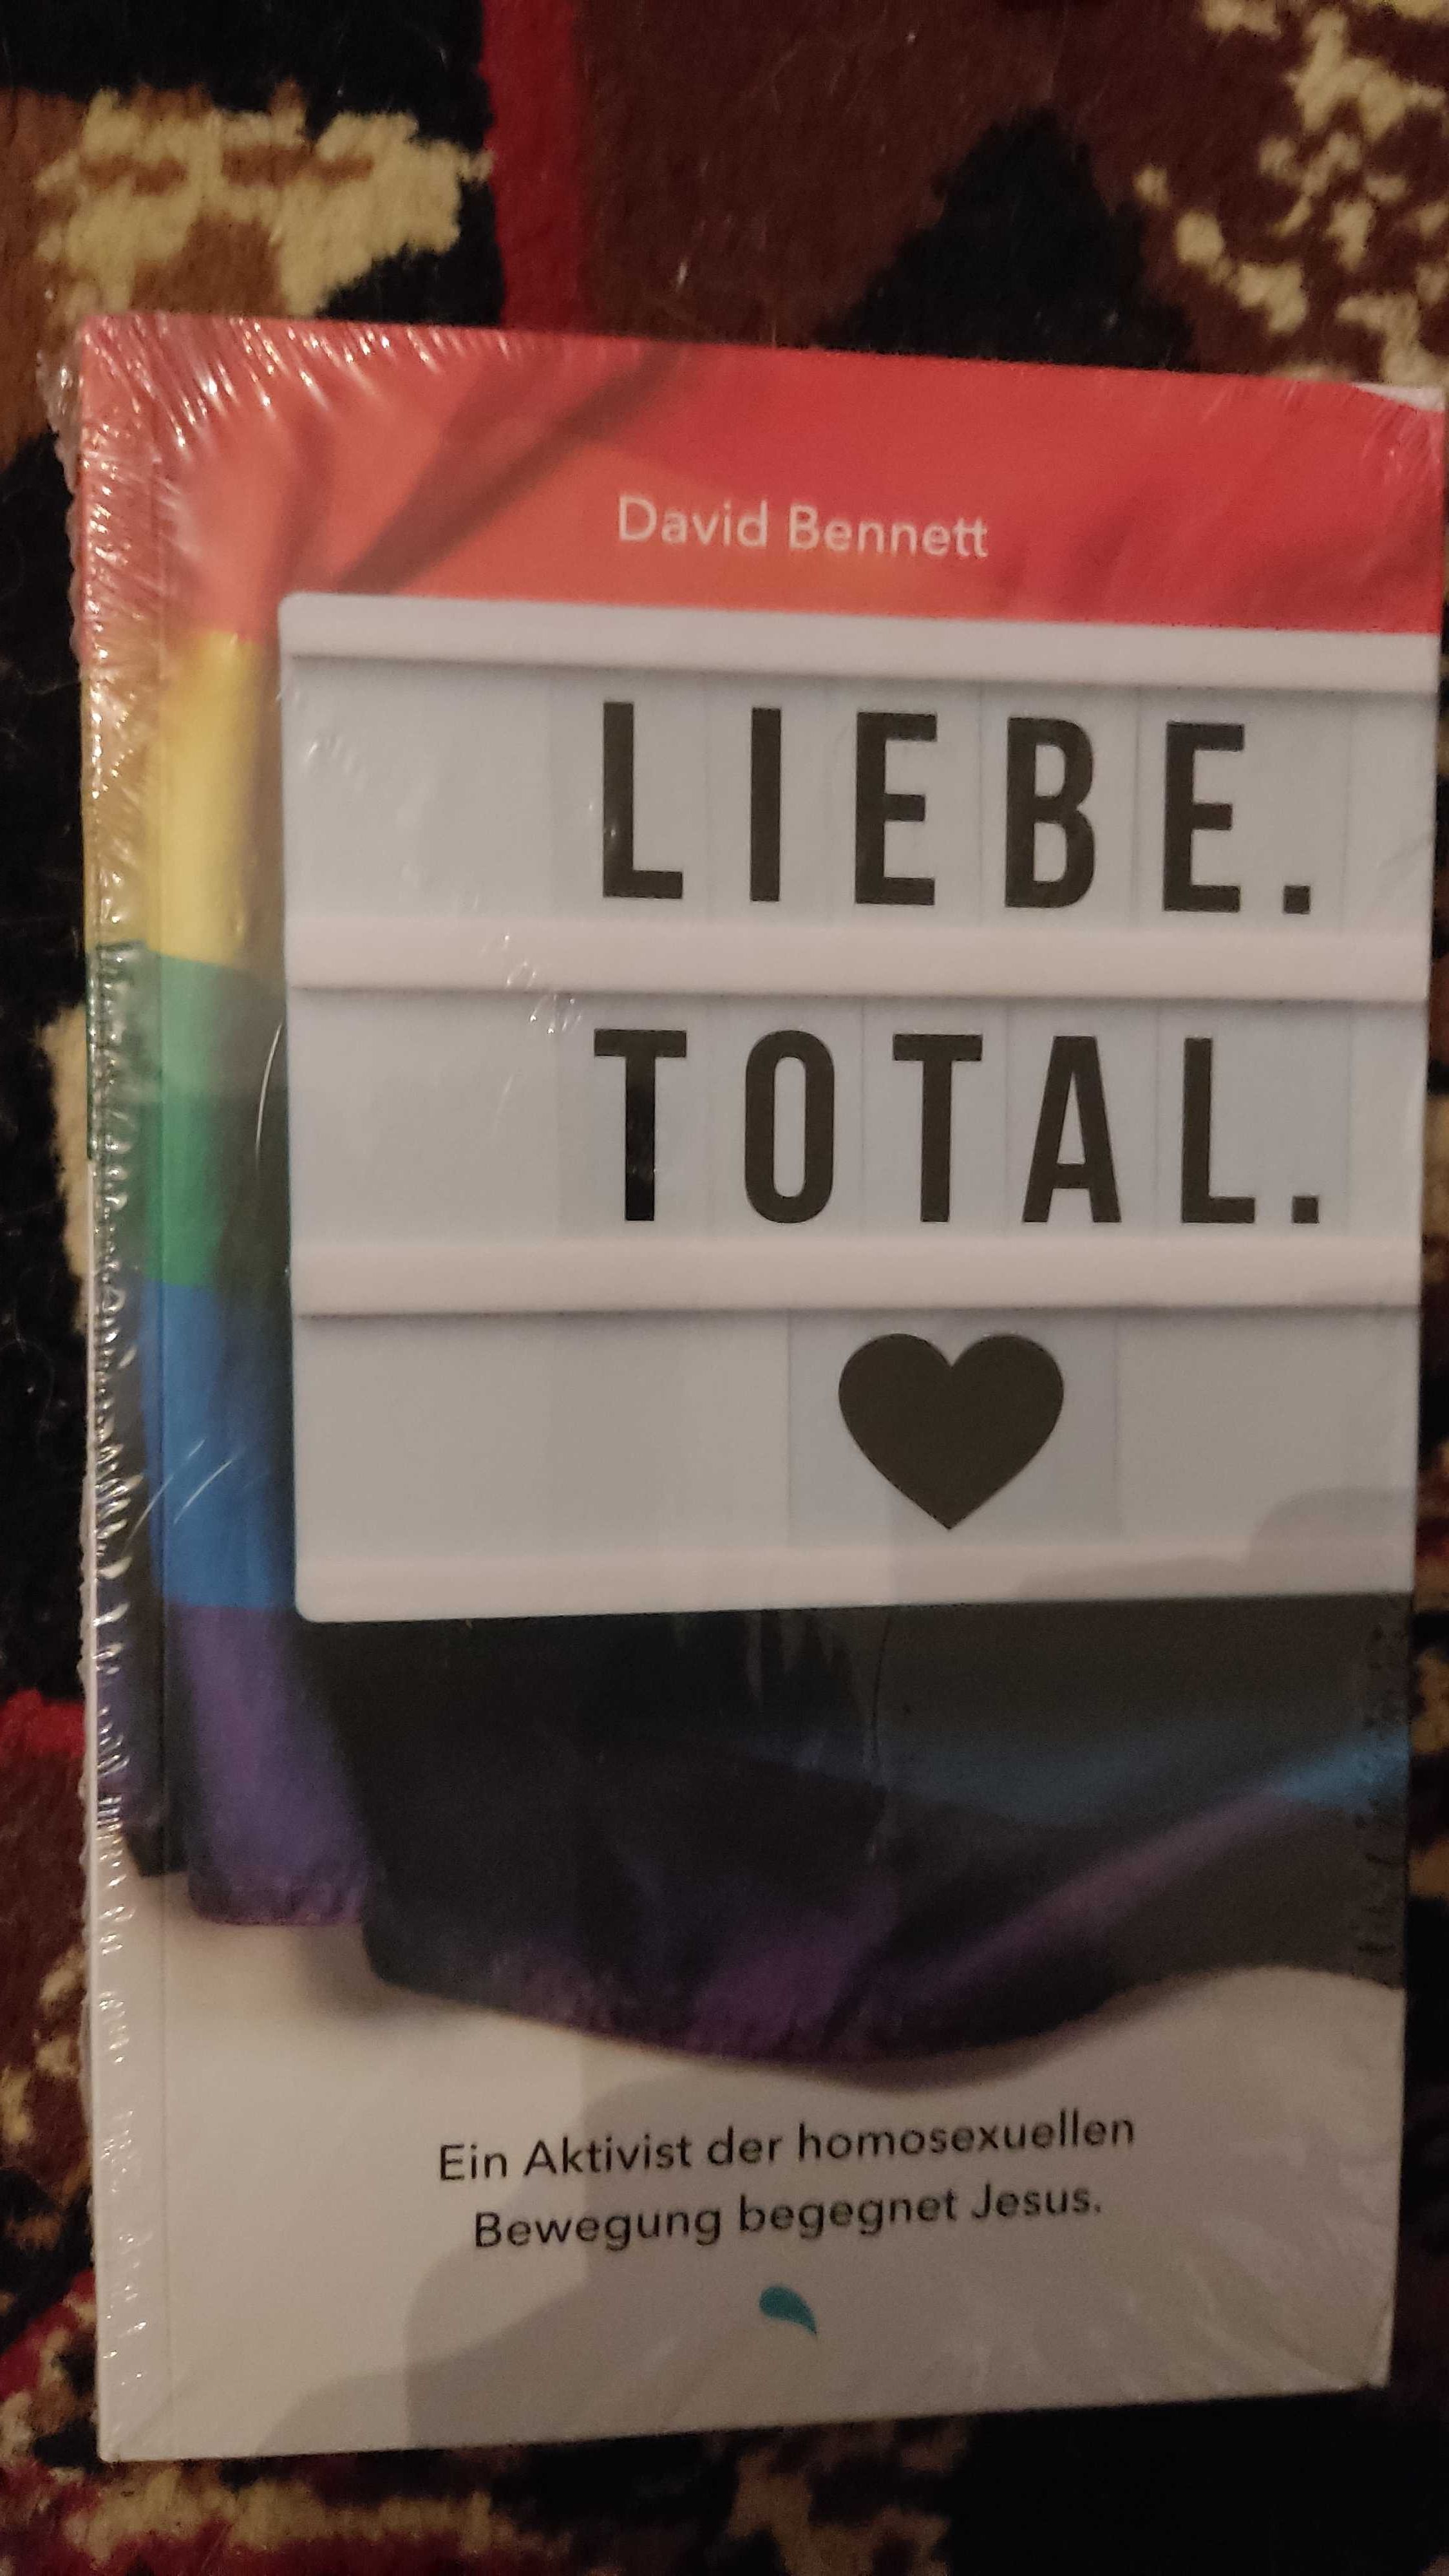 Książka po niemiecku